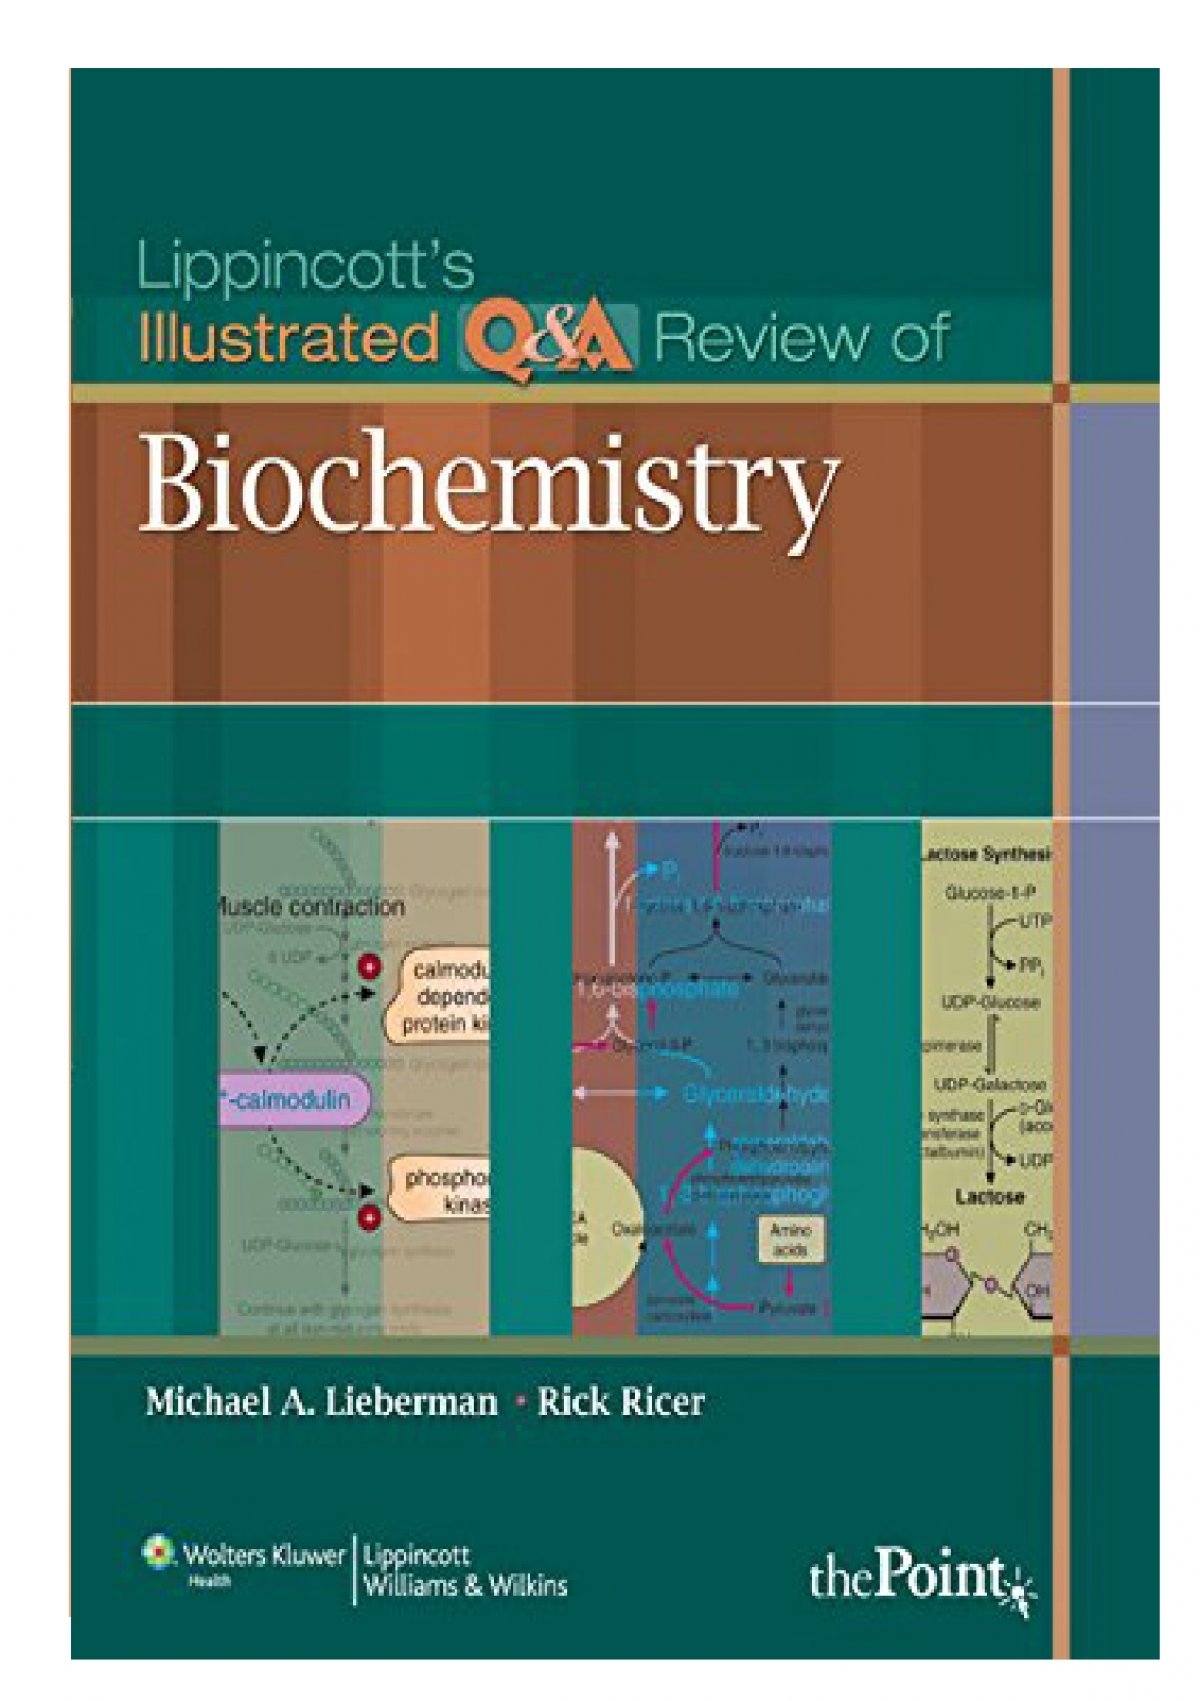 lippincott illustrated biochemistry free download